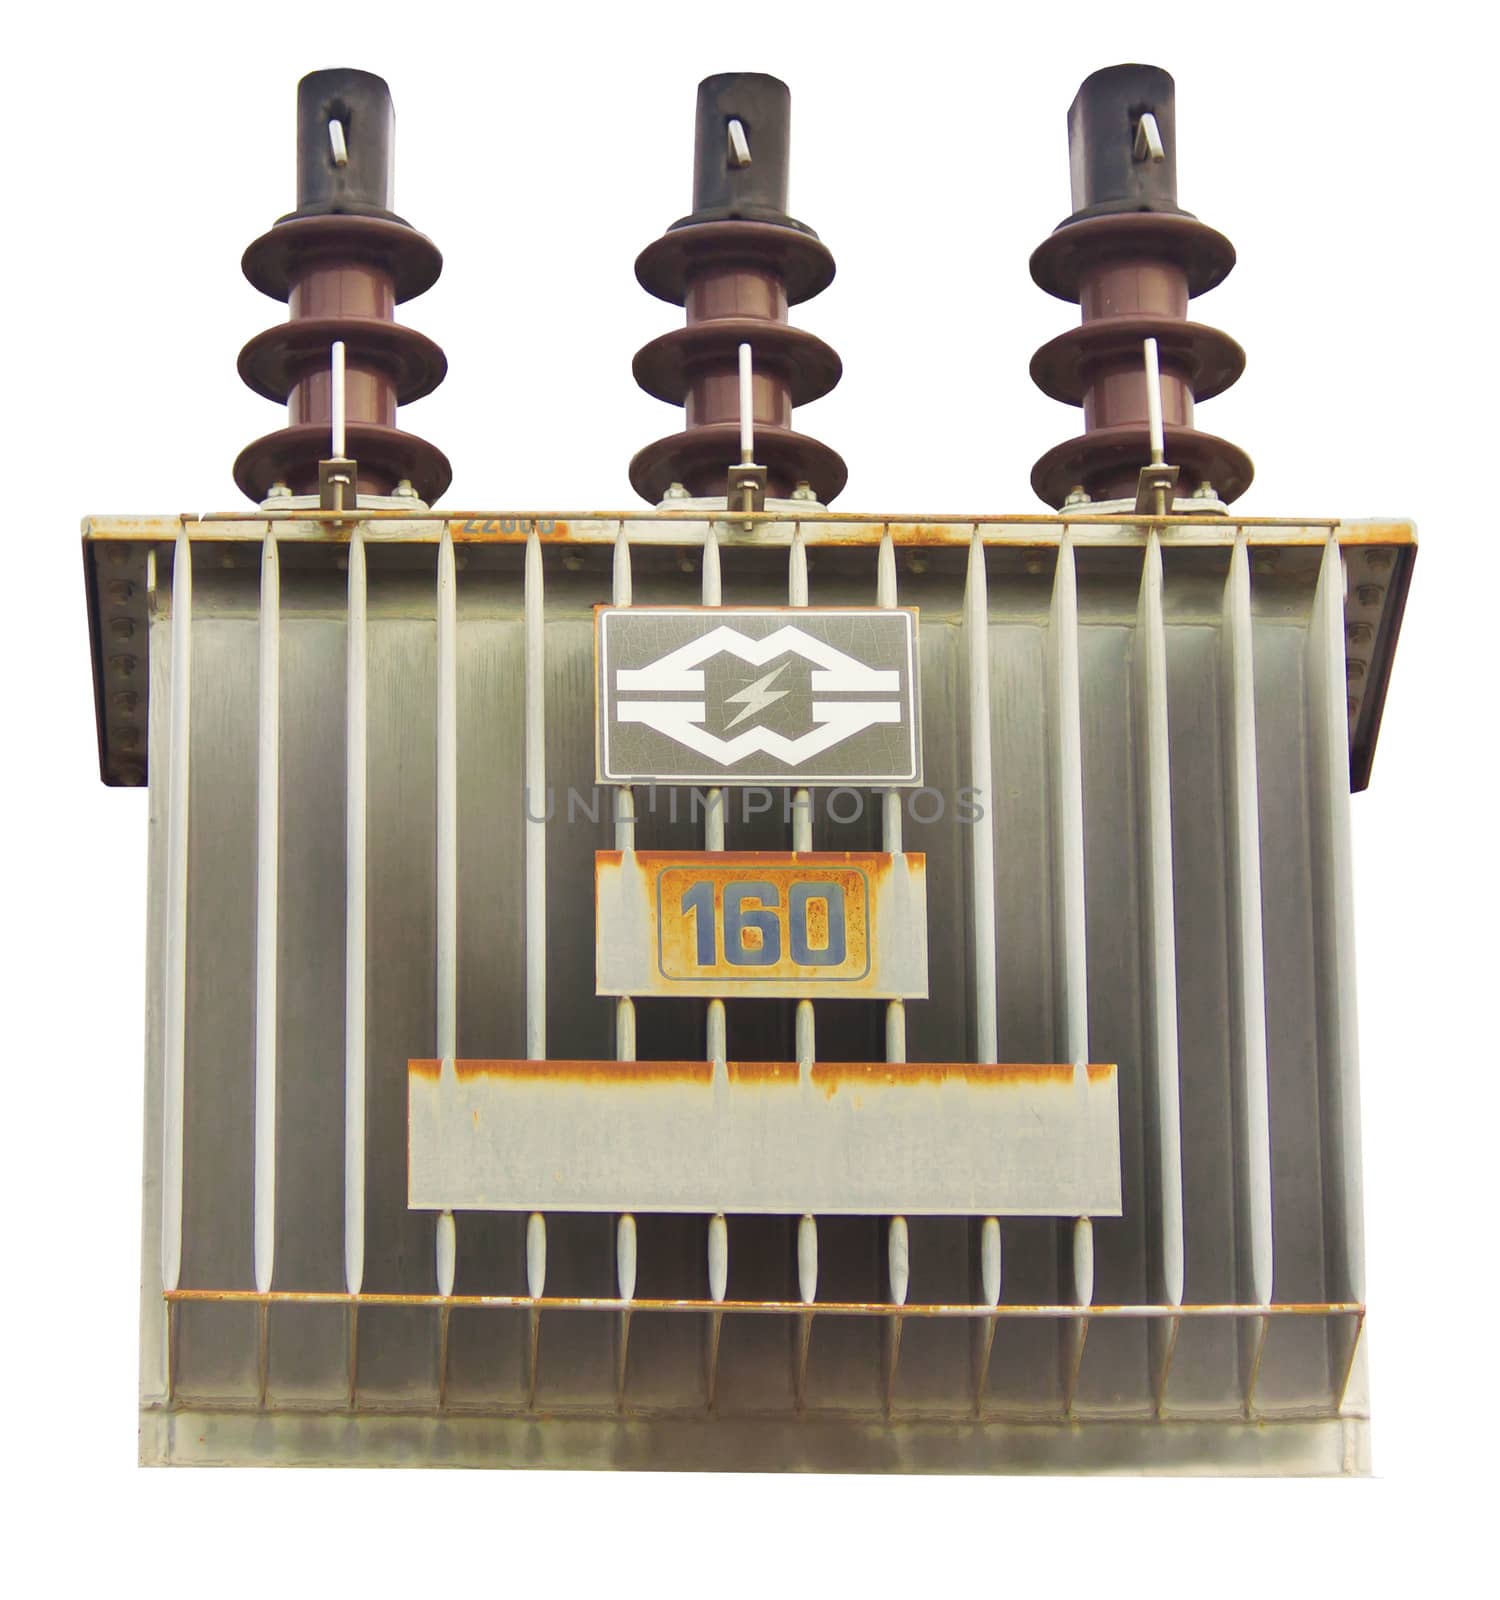 transformer on high power station. by sutipp11